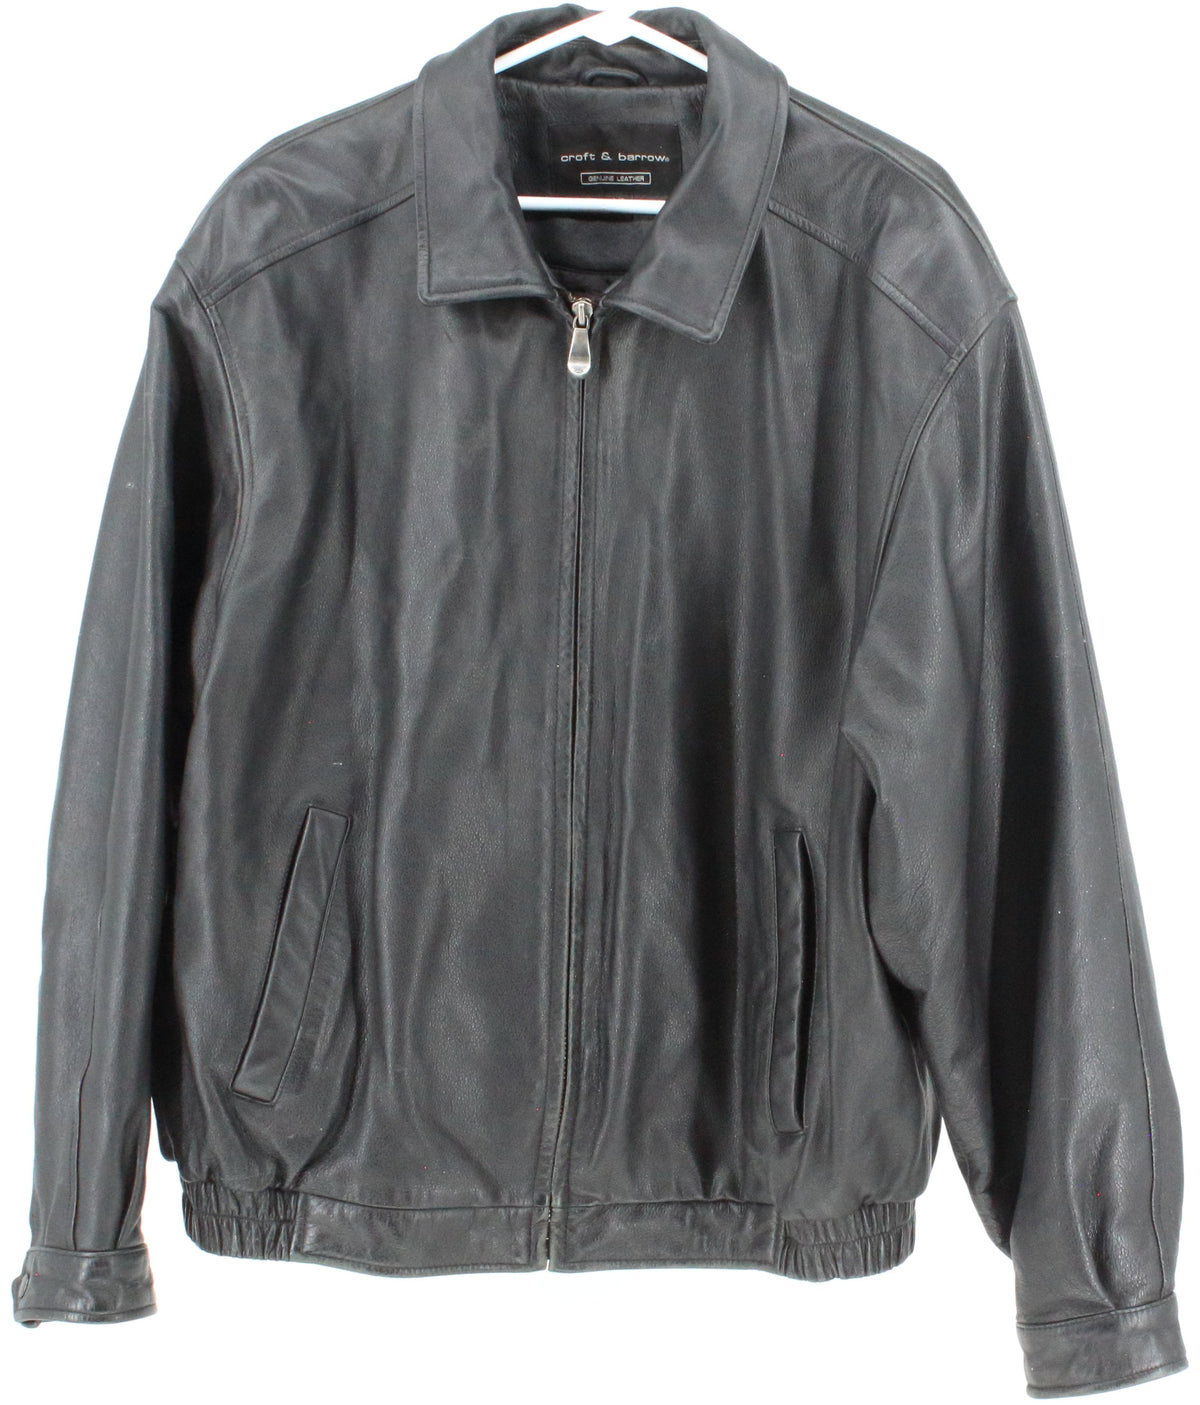 Croft & Barrow Black Leather Jacket